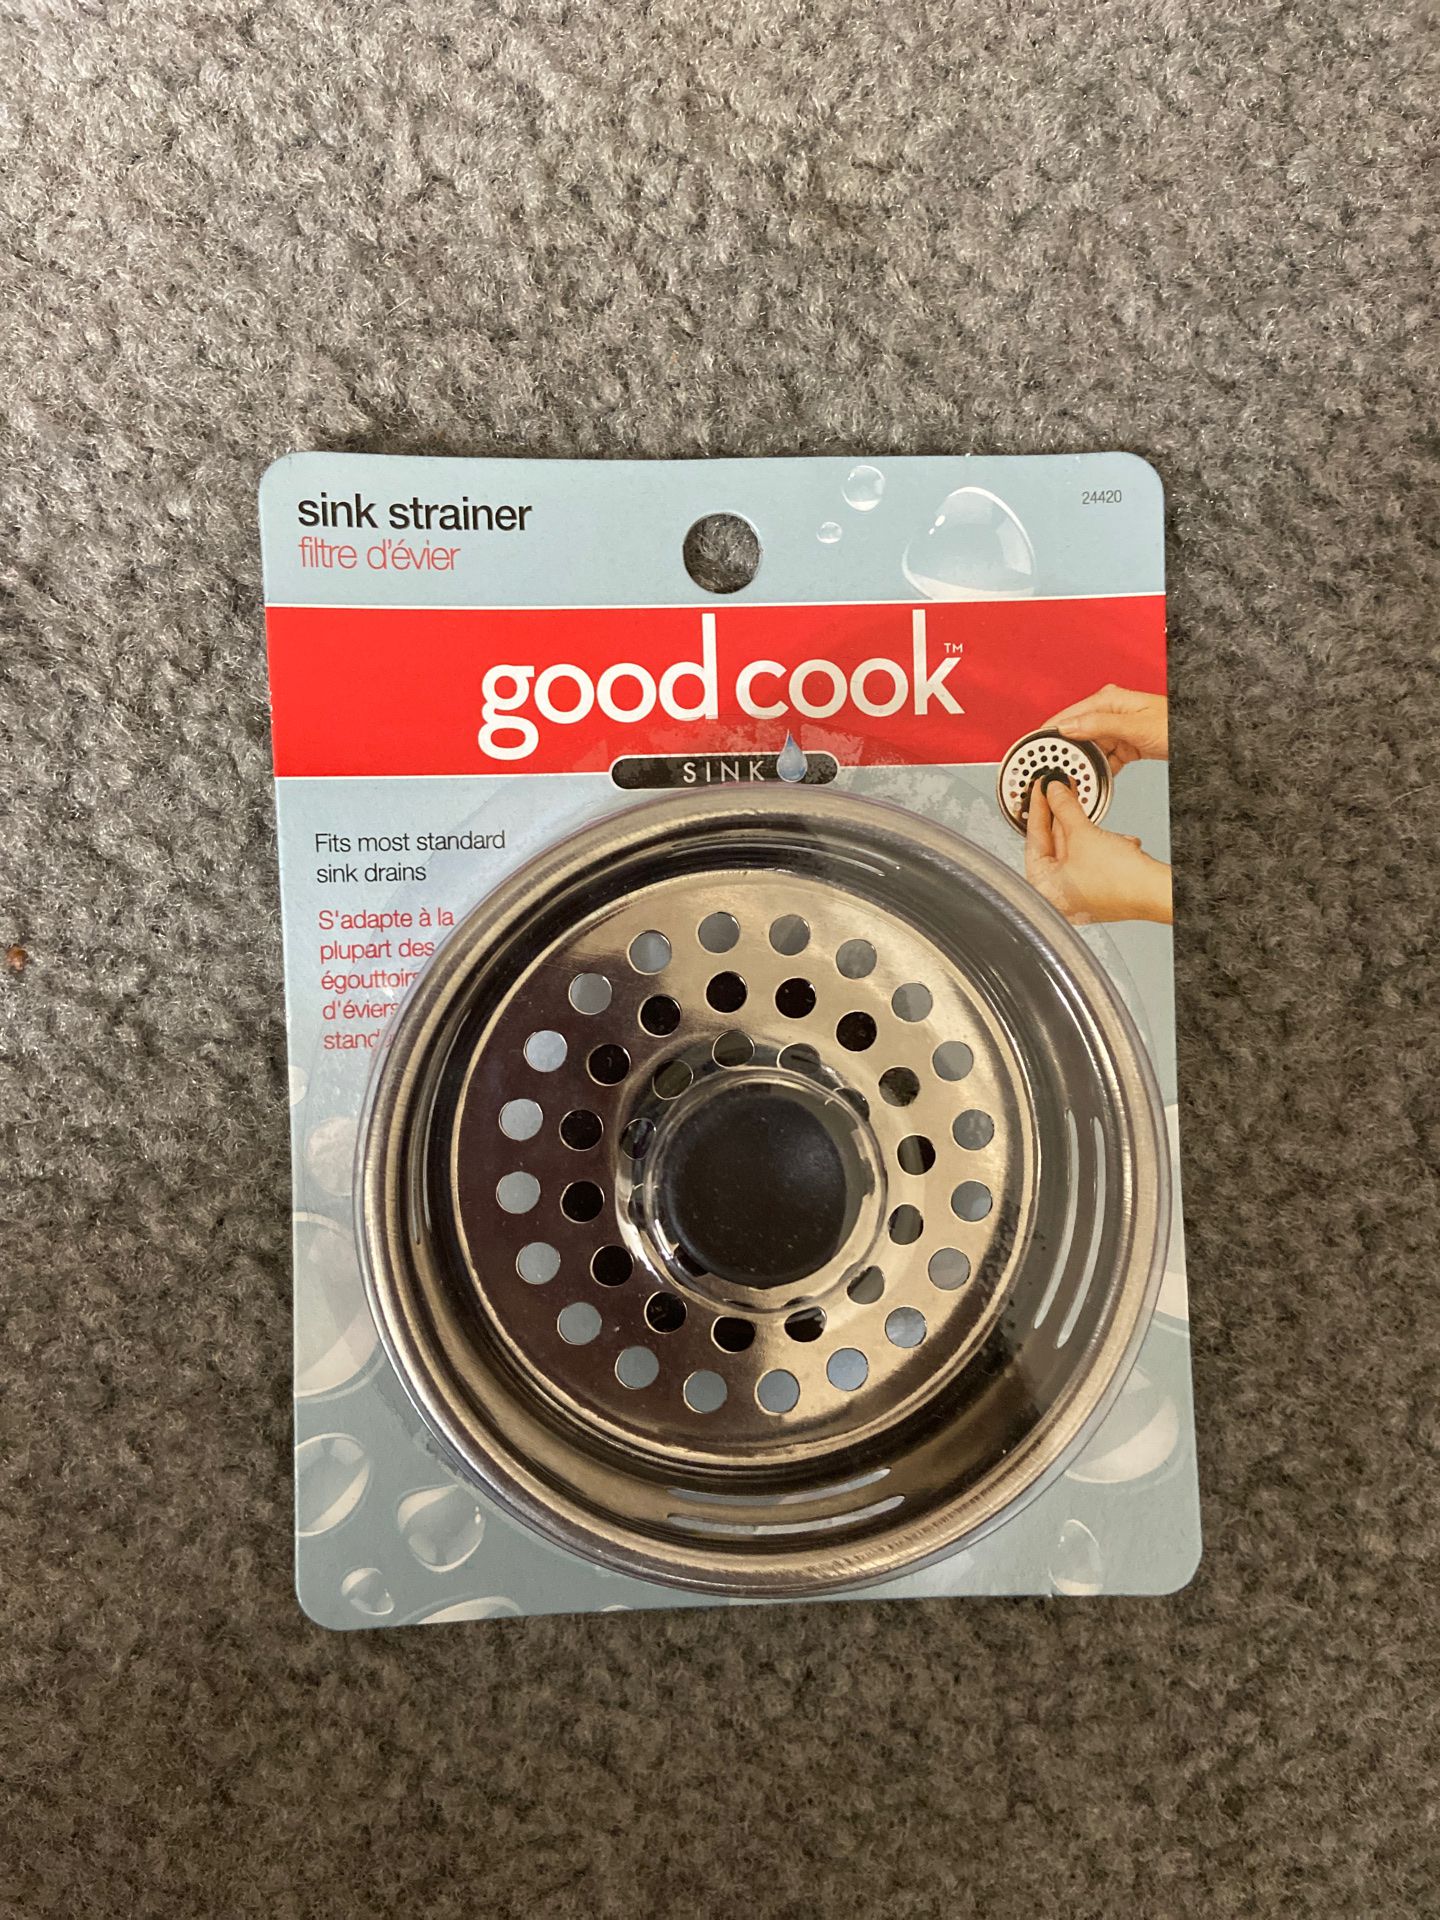 Good cook sink strainer $4